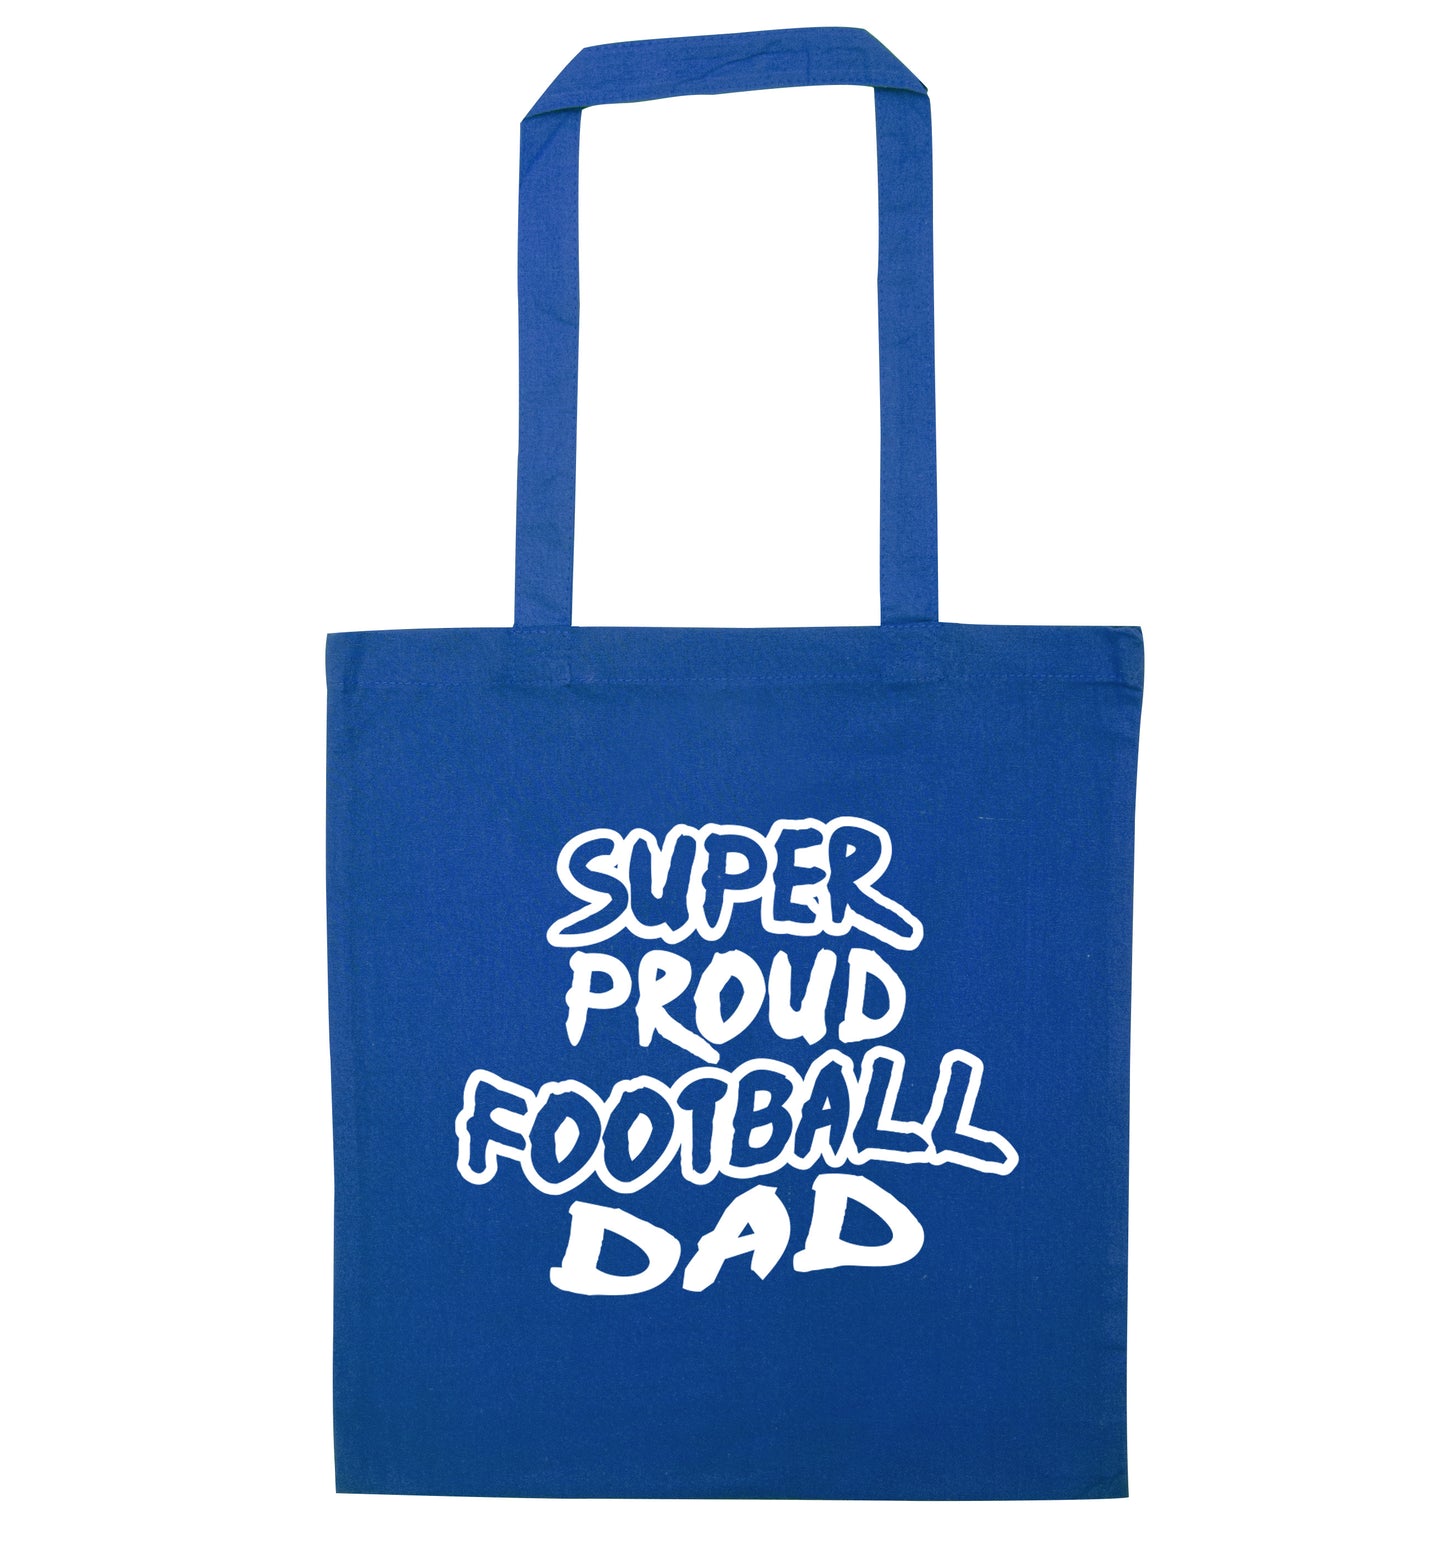 Super proud football dad blue tote bag